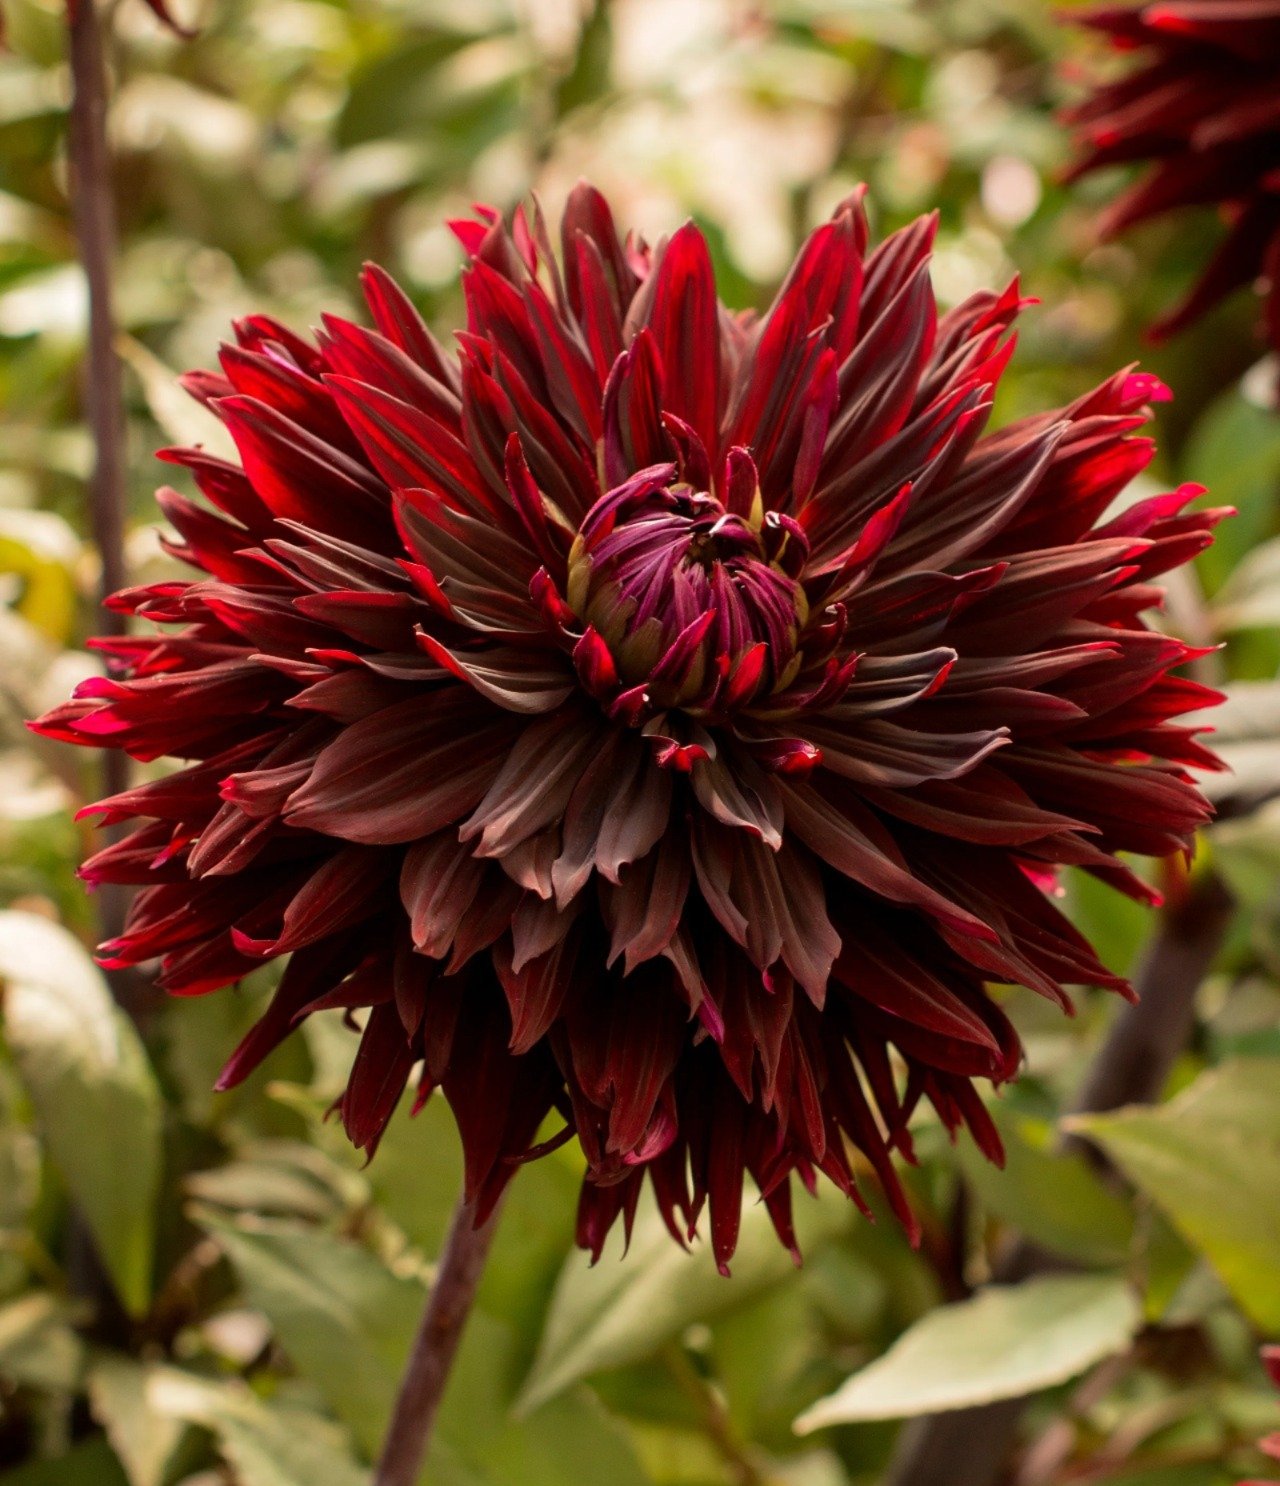 Black Jack Dahlia: A vibrant red flower with deep, dark petals